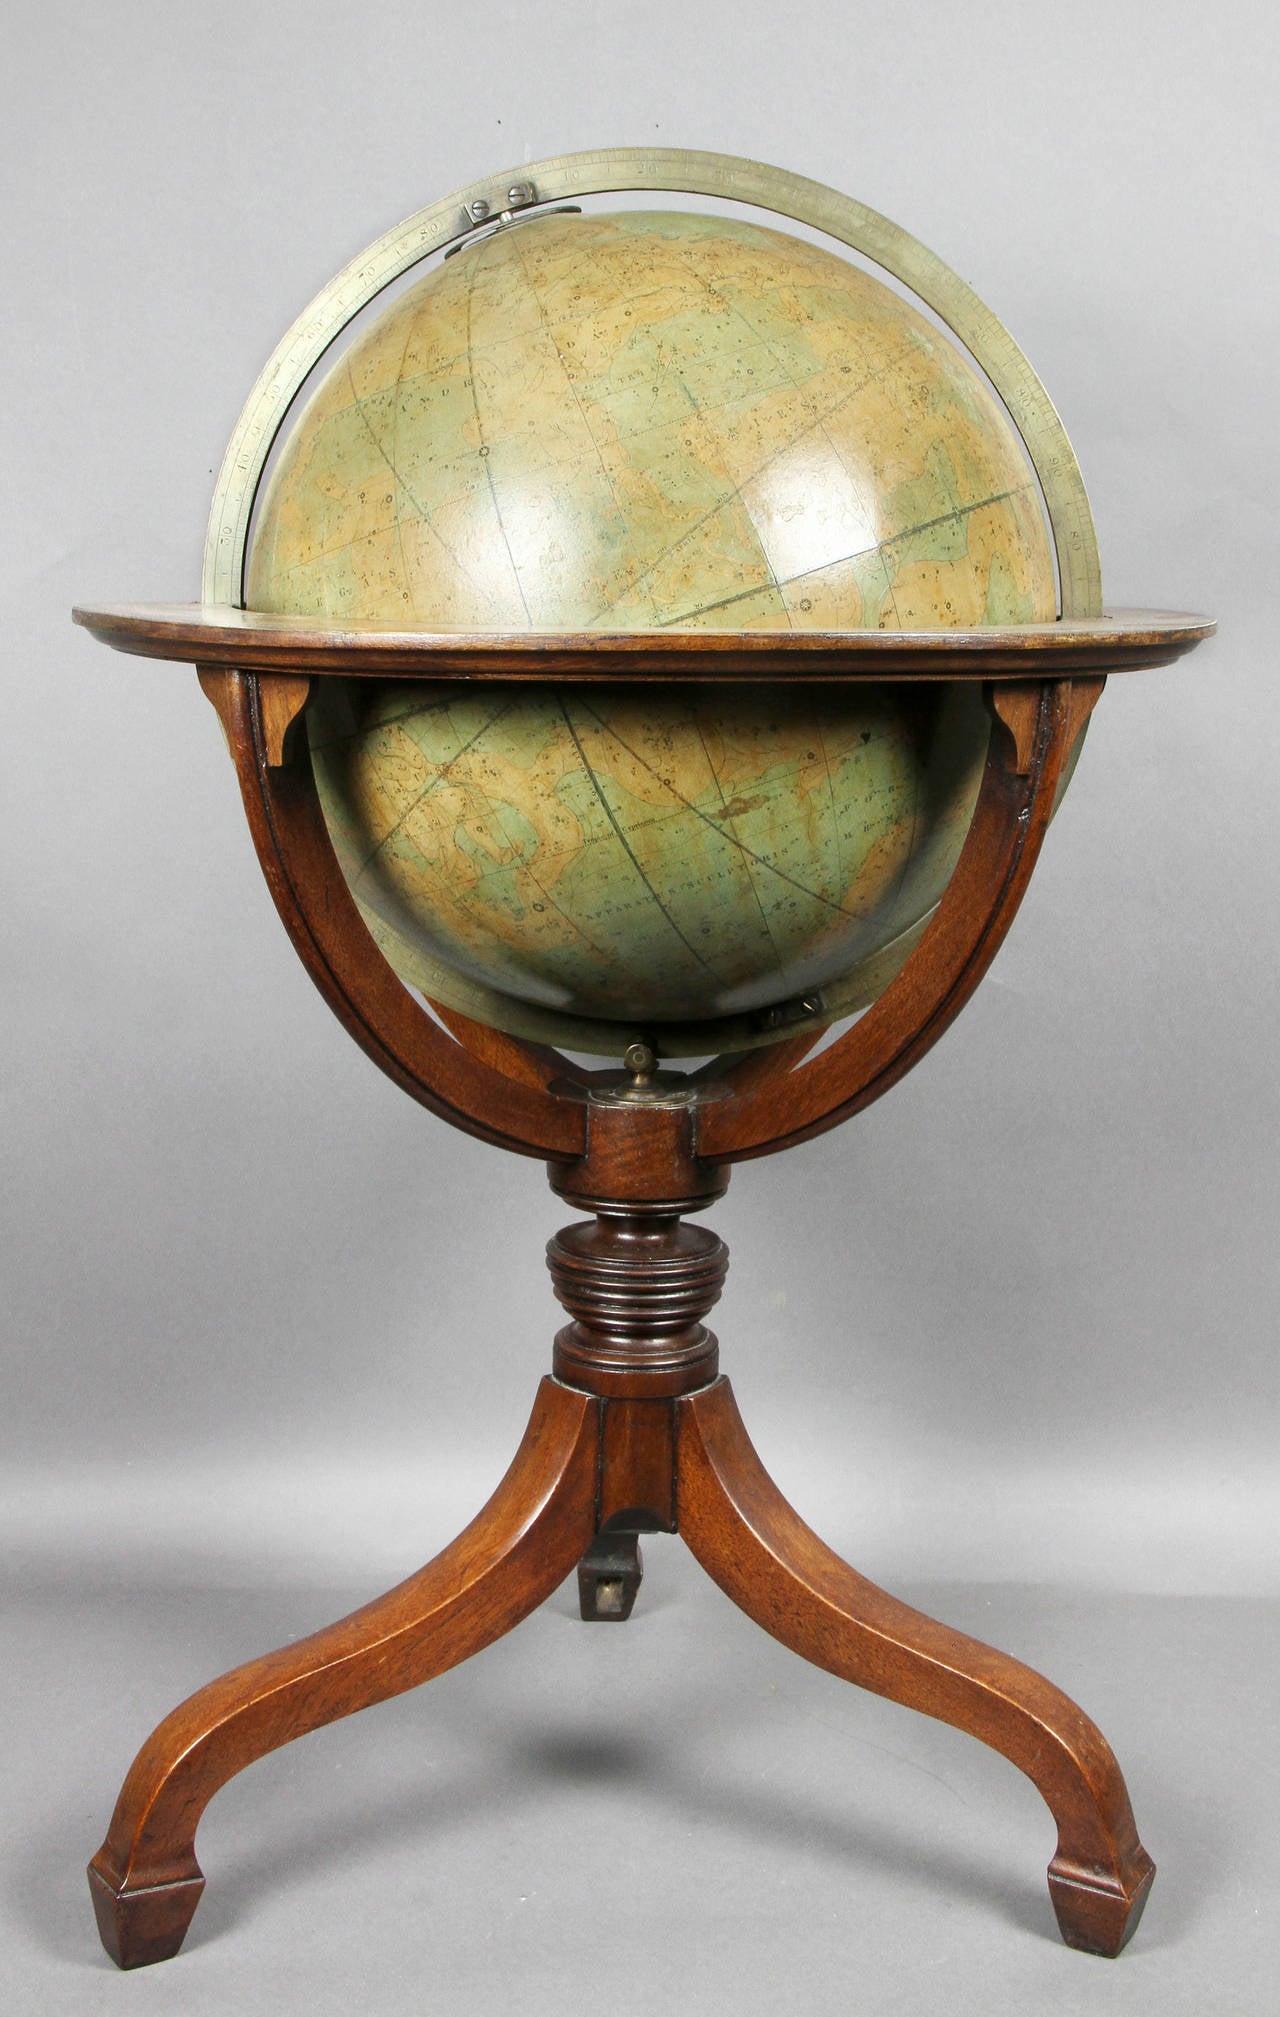 William IV Late Regency Celestrial Table Globe by James Wyld, London